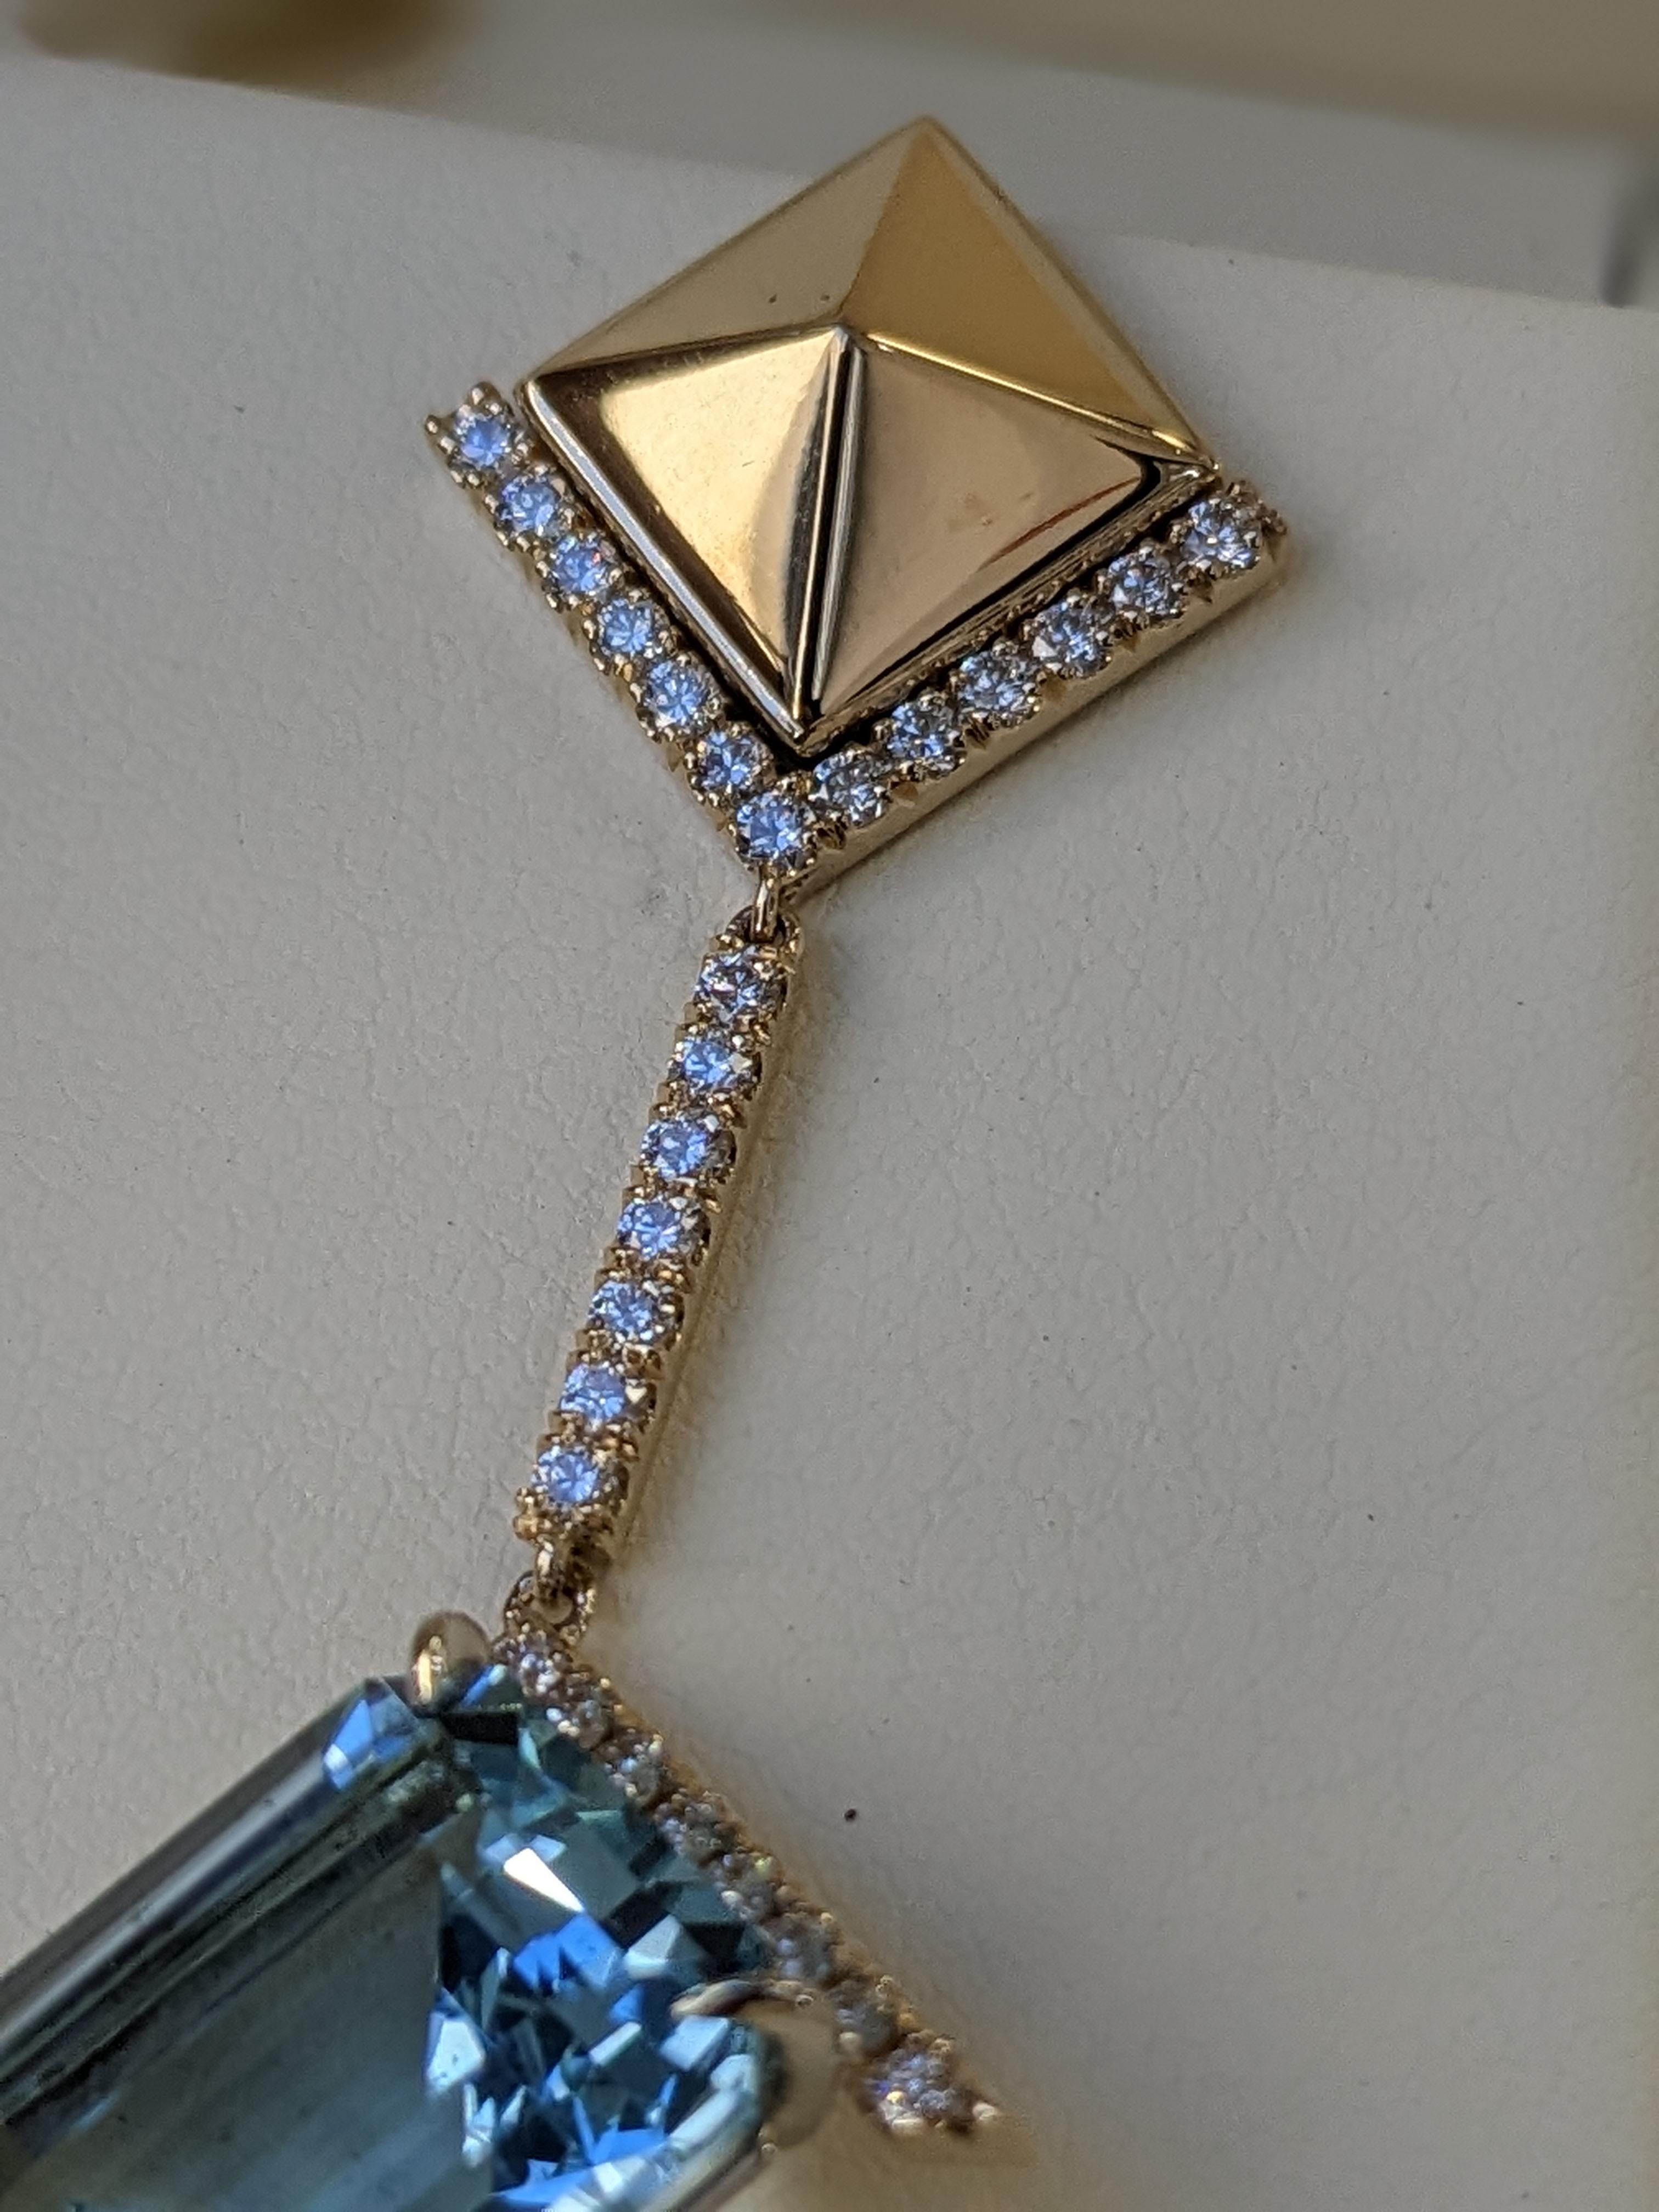 Dangling Aquamarine Diamonds earrings in 18k Yellow gold Pyramid For Sale 1